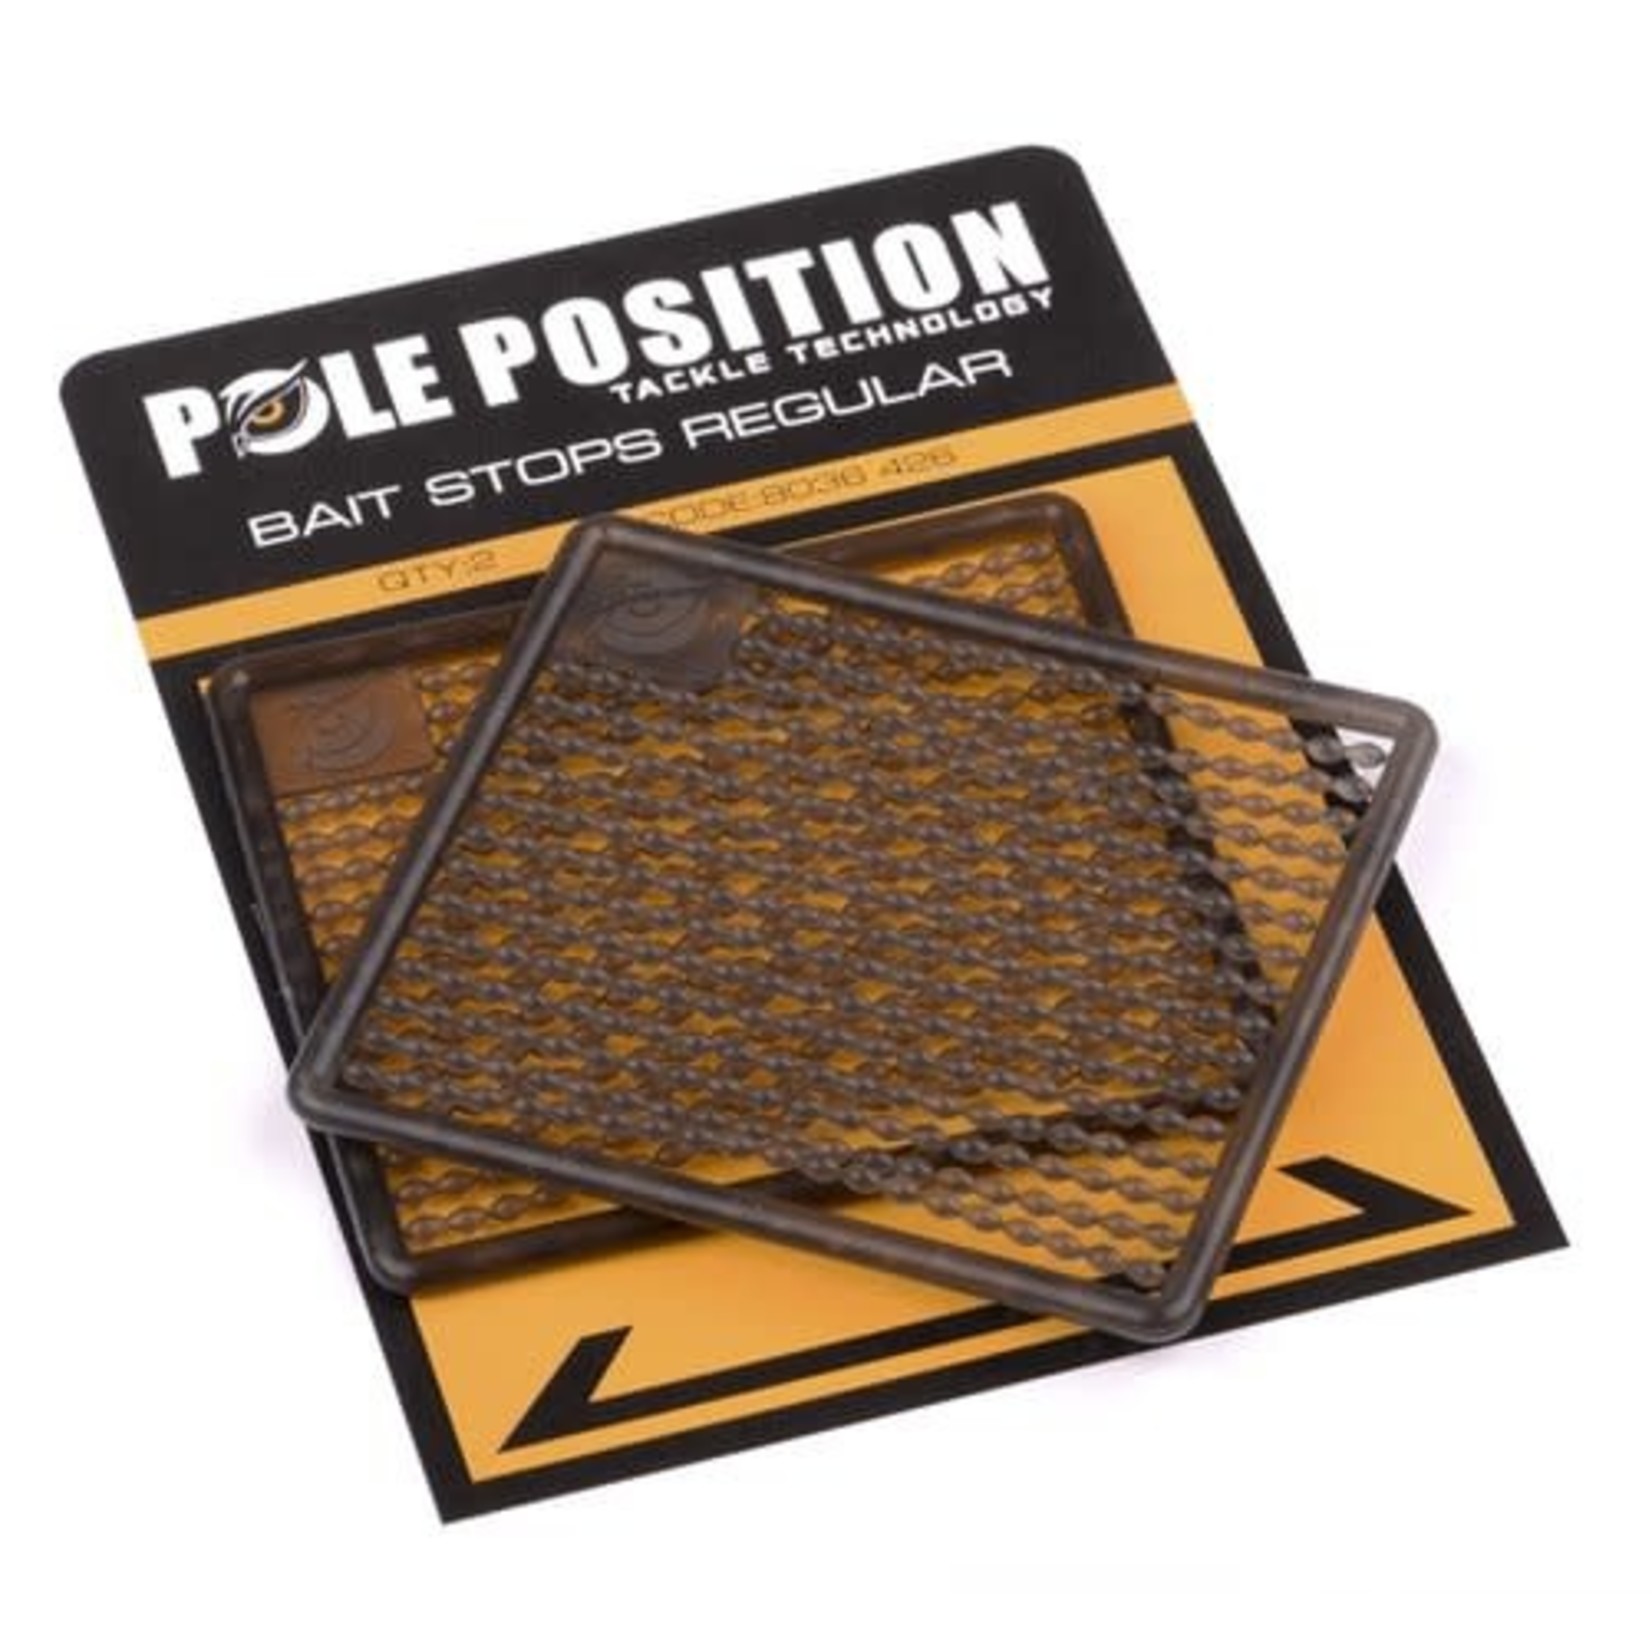 POLE POSITION Pole Position BAIT STOPS REGULAR